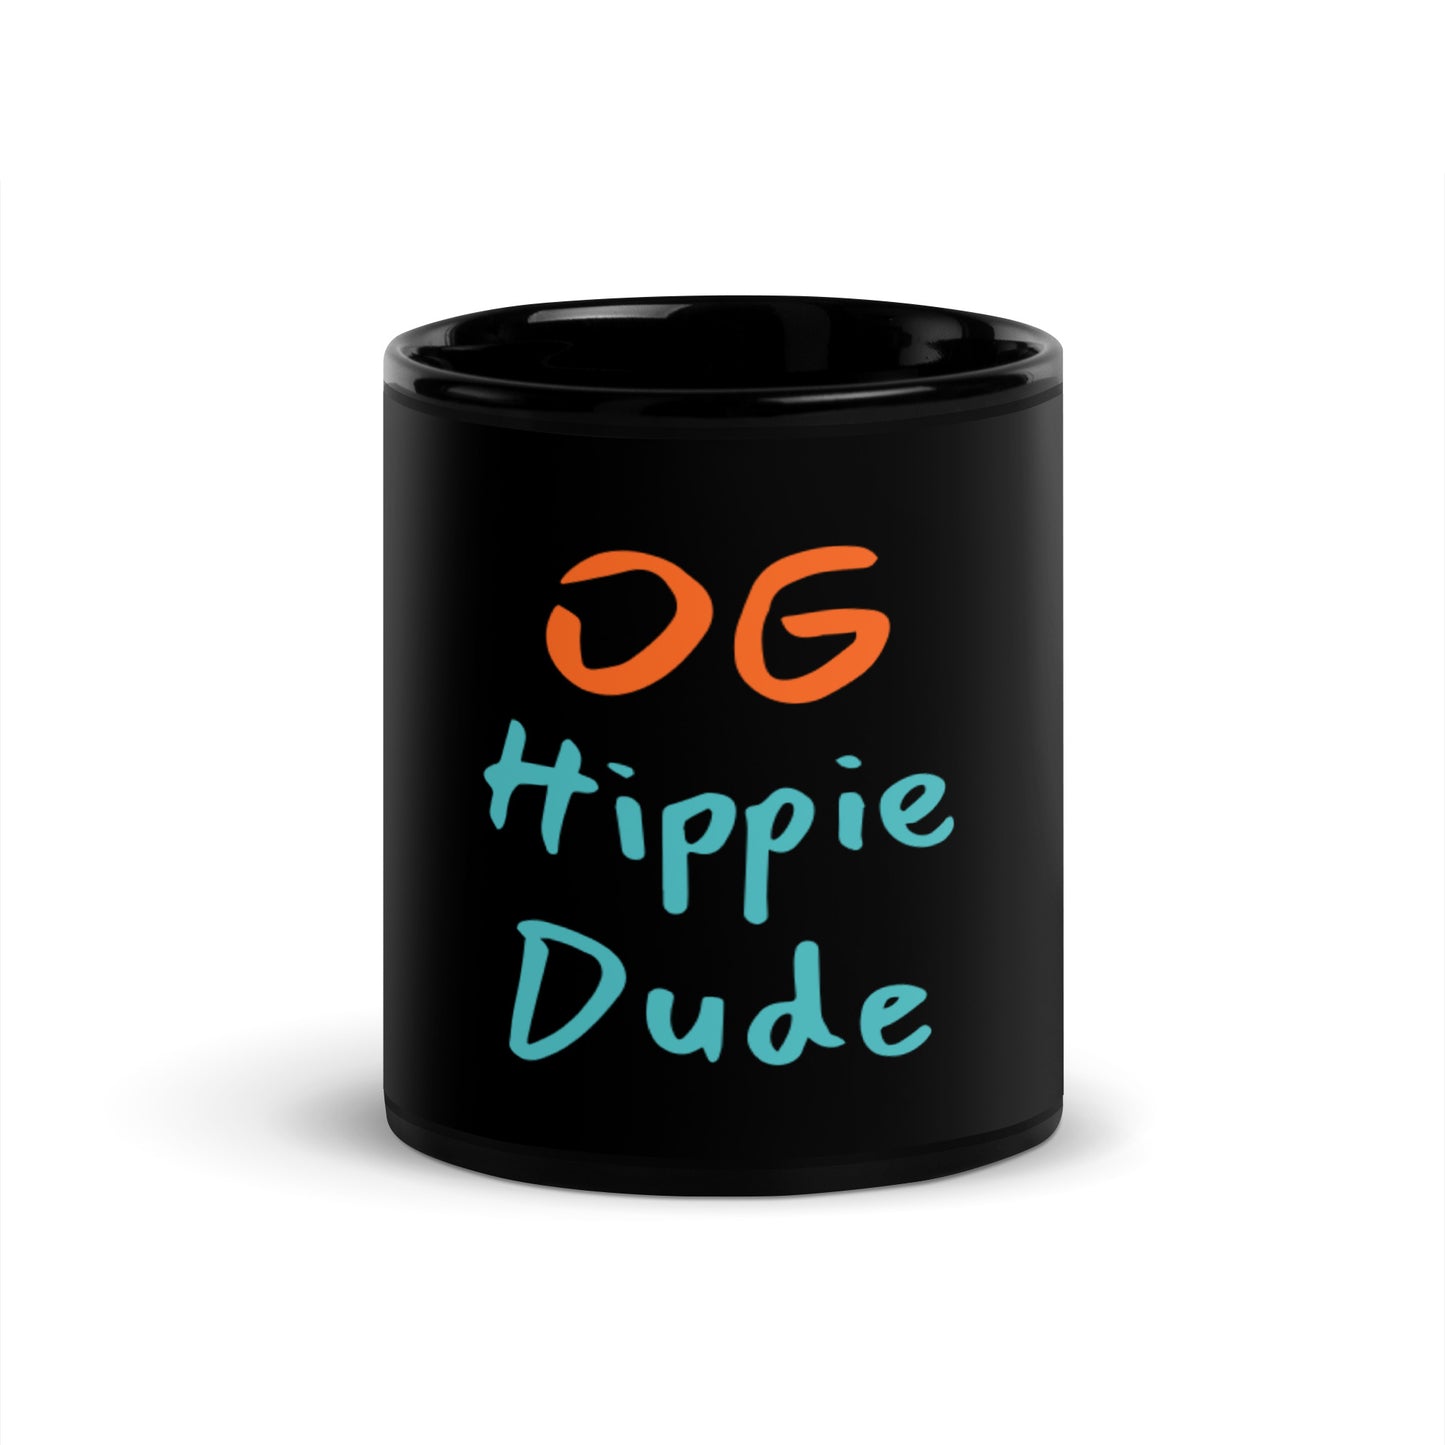 Mug noir brillant - OG Hippie Dude